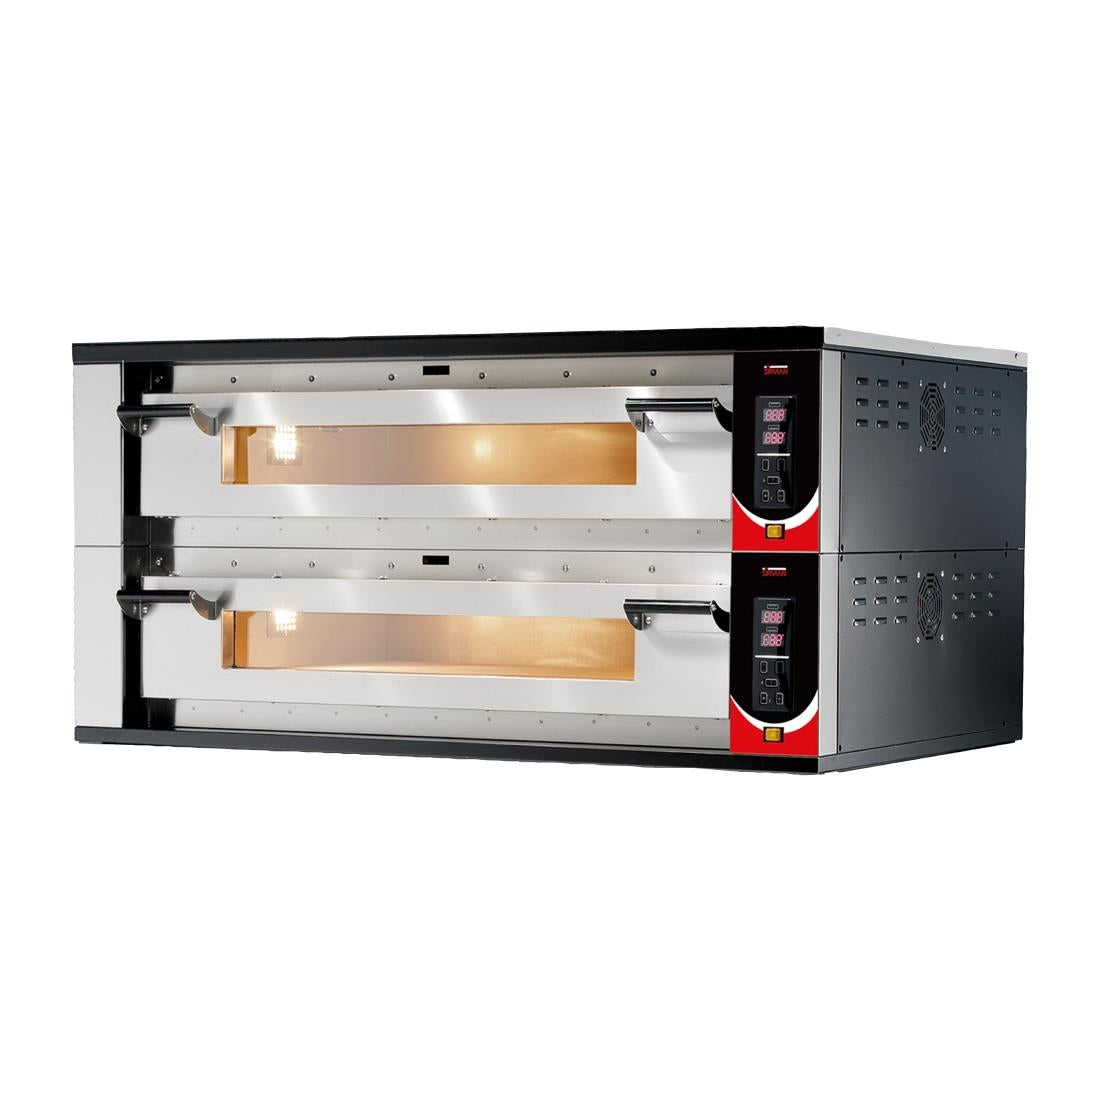 CU087 Sirman Vesuvio 105x105 Double Deck Pizza Oven JD Catering Equipment Solutions Ltd